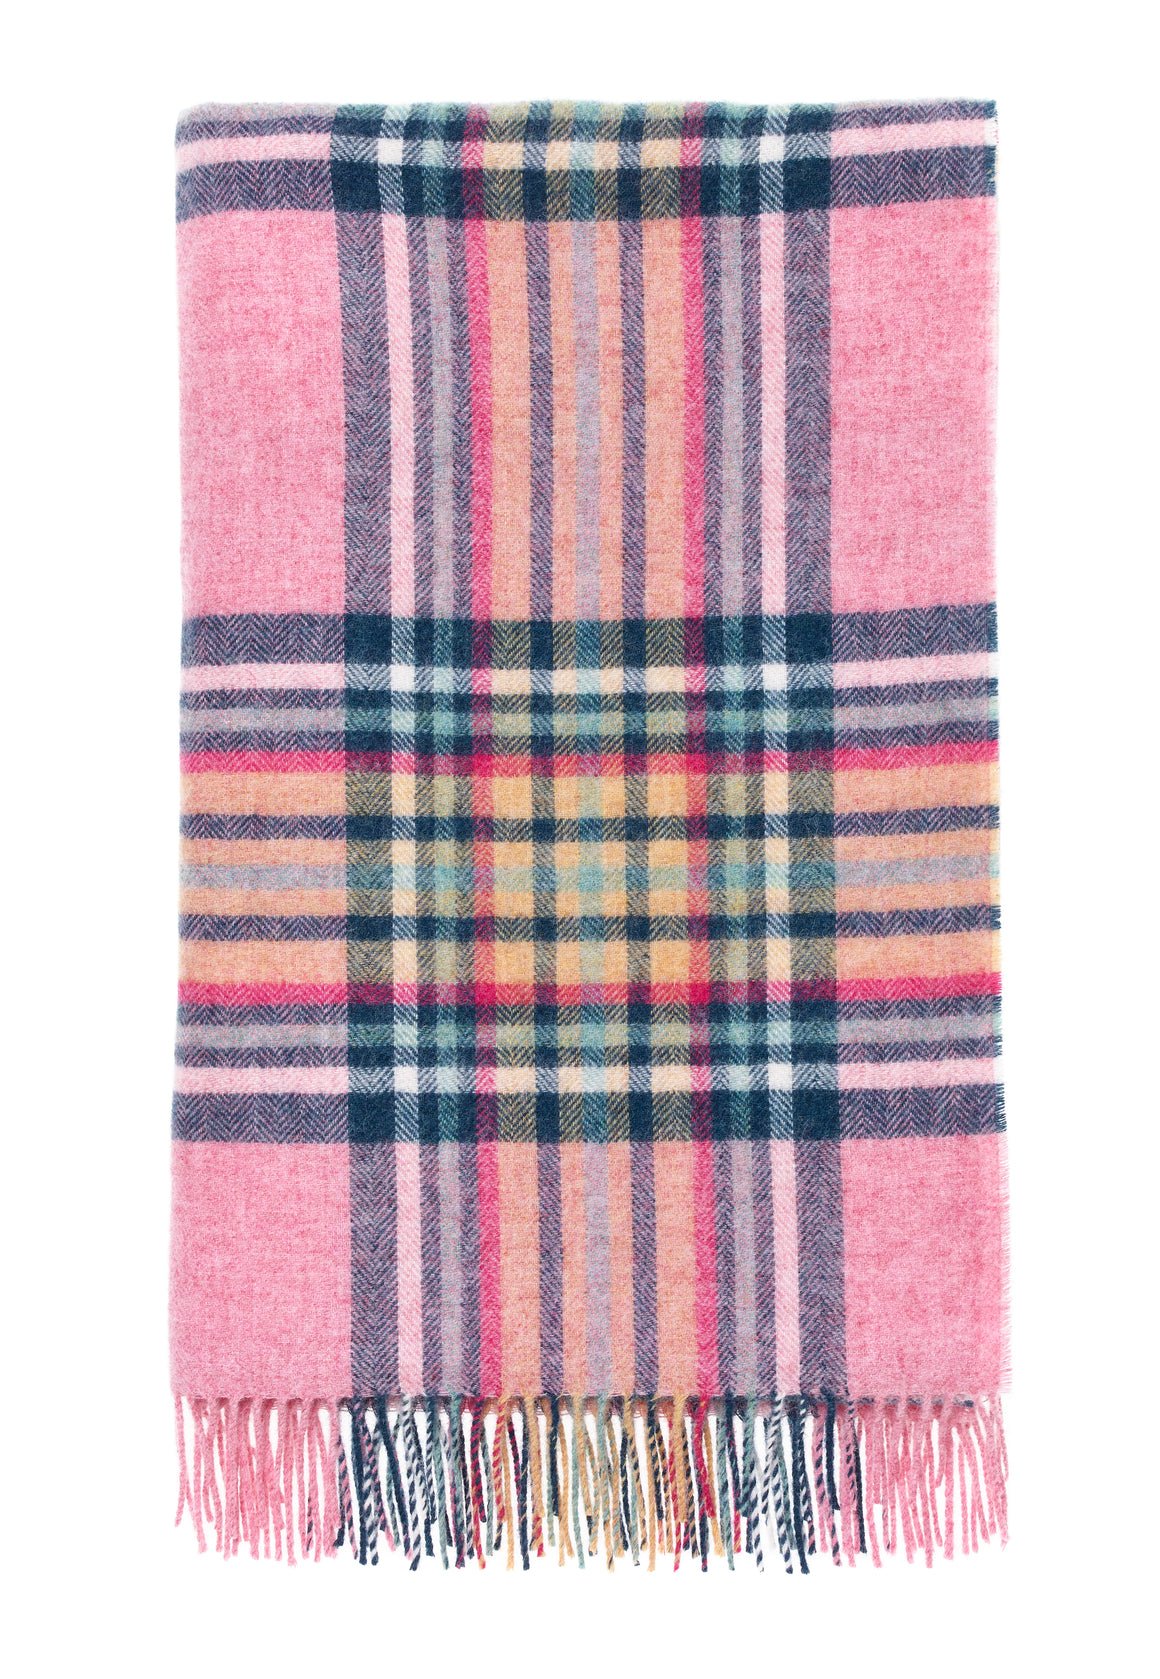 Shetland Pure New Wool - St. Ives Pink - Throw Blanket - Bronte by Moon